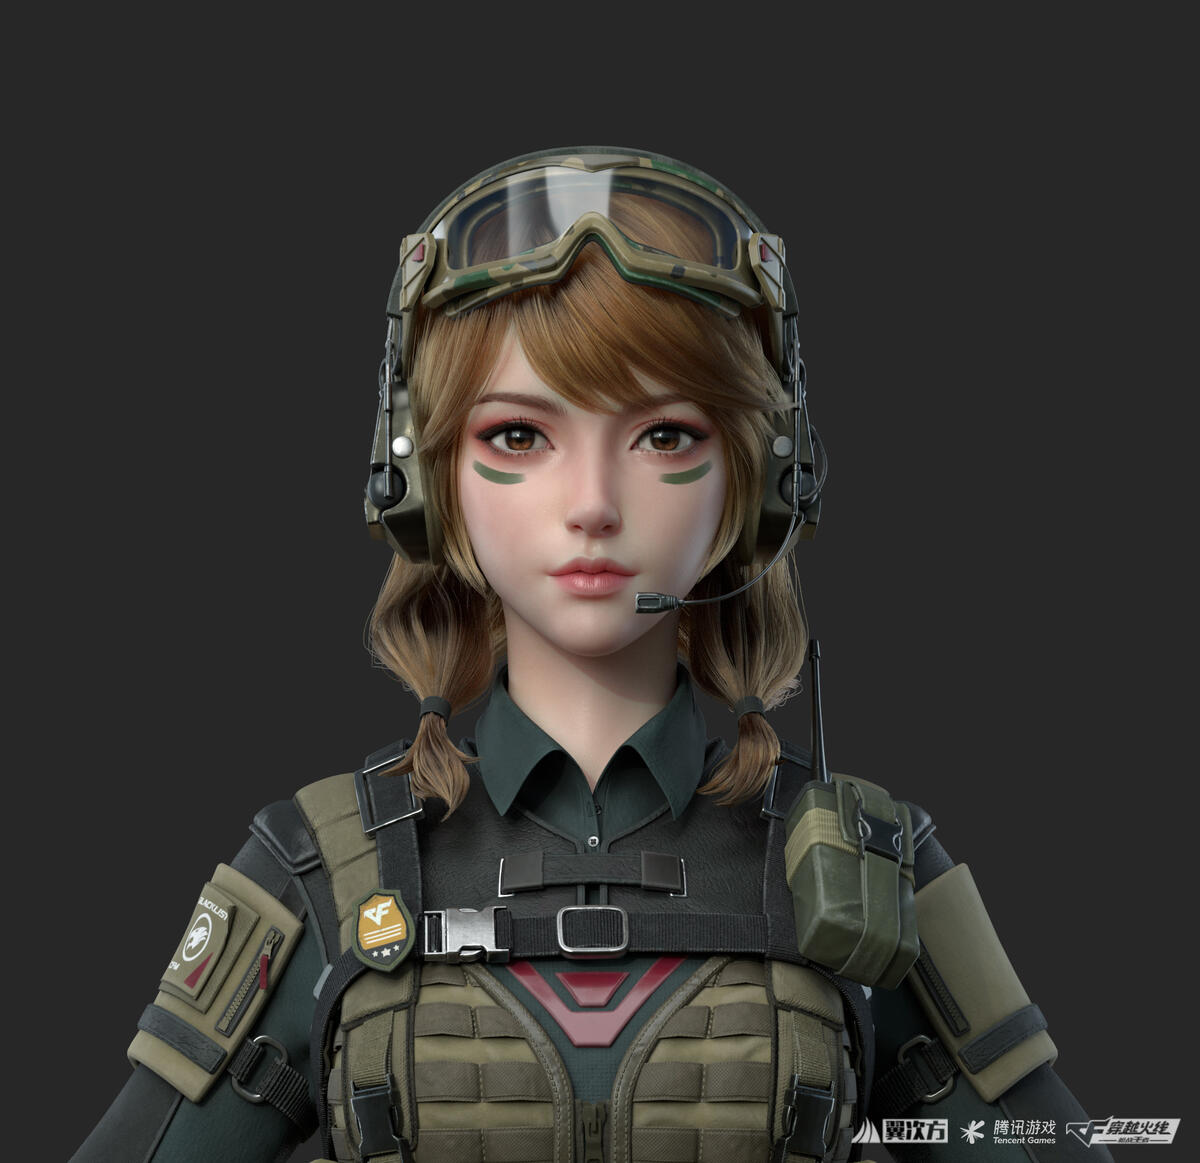 Anime girl soldier stormtrooper.